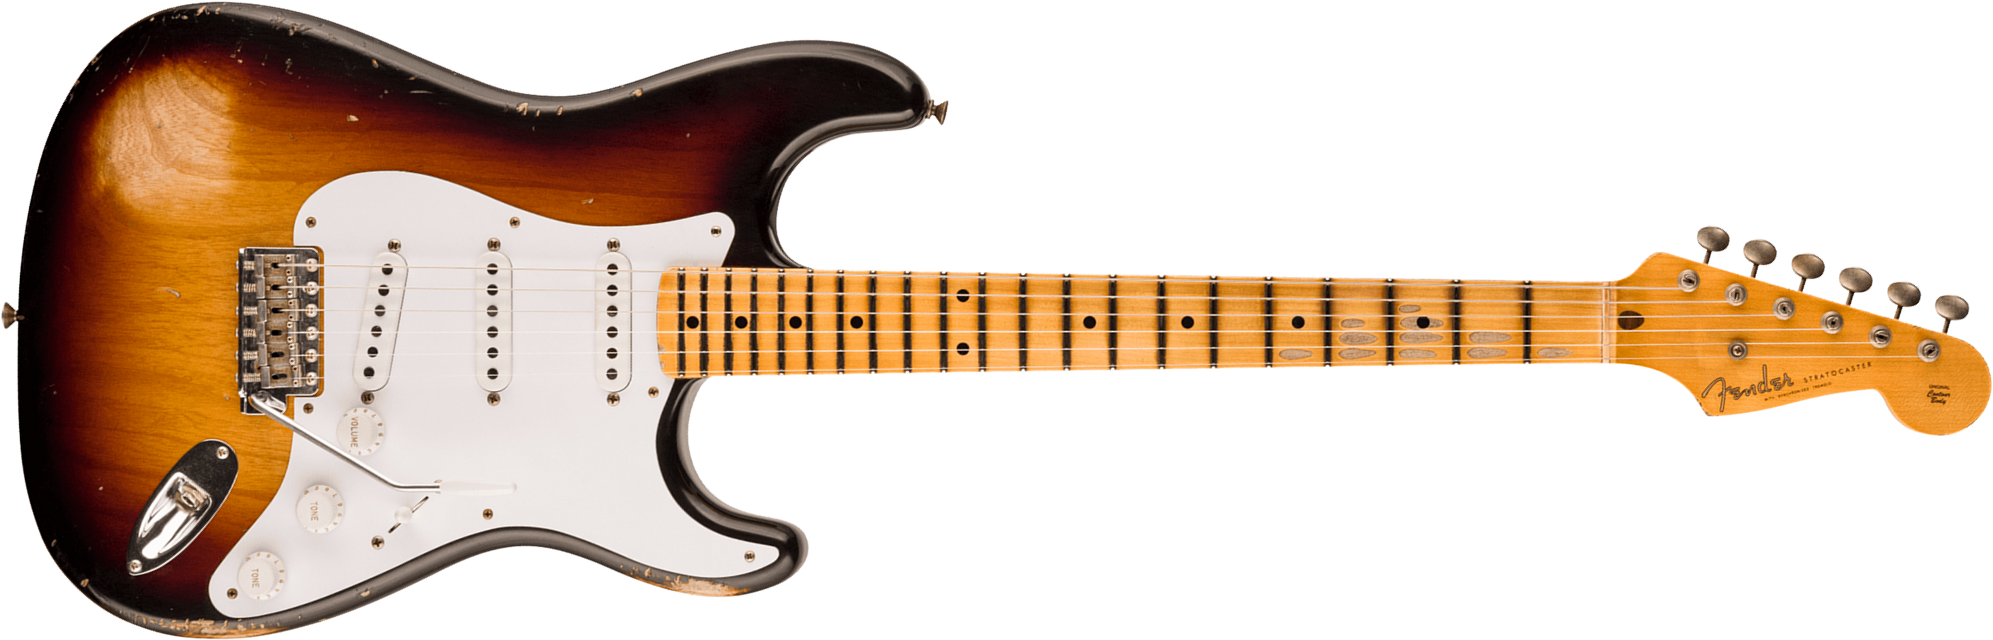 Fender Custom Shop Strat 1954 70th Anniv. 3s Trem Mn - Relic Wide-fade 2-color Sunburst - Str shape electric guitar - Main picture